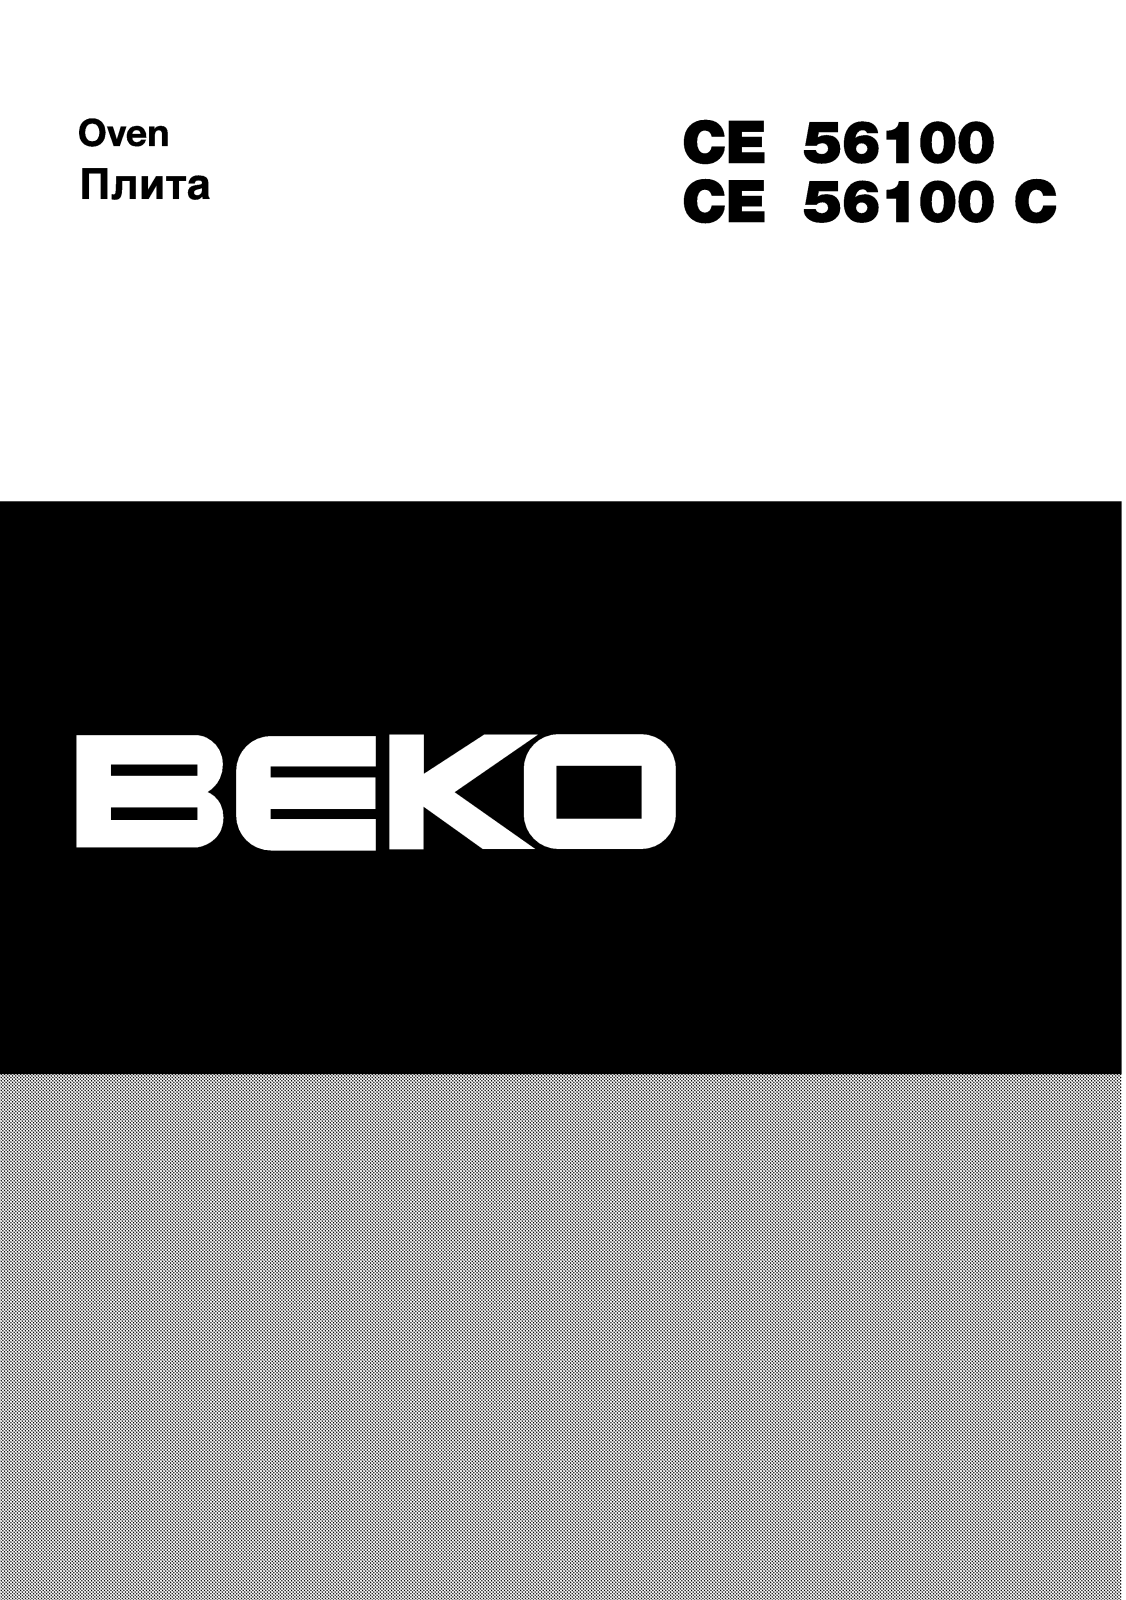 Beko CE 56100, CE 56100 C User Manual